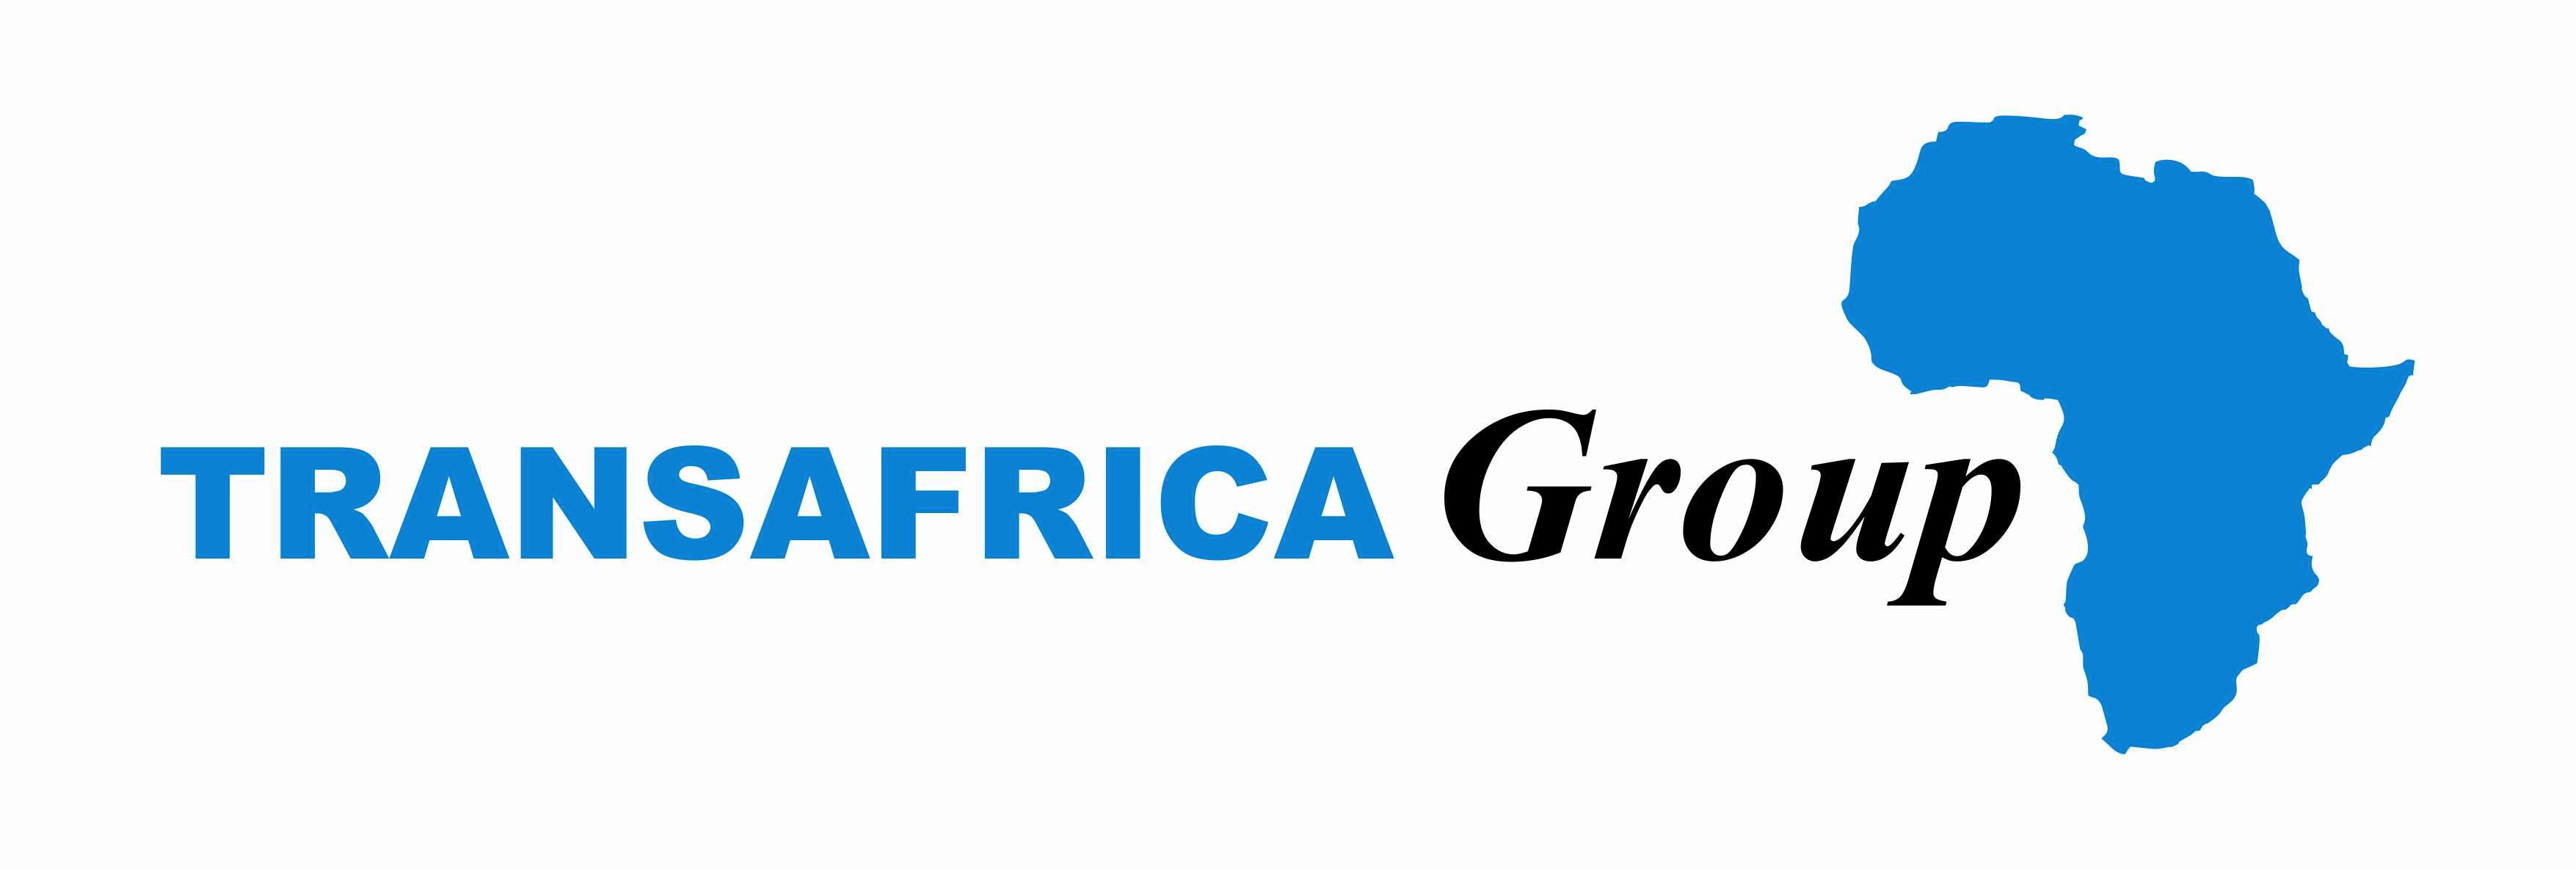 Transafrica Group